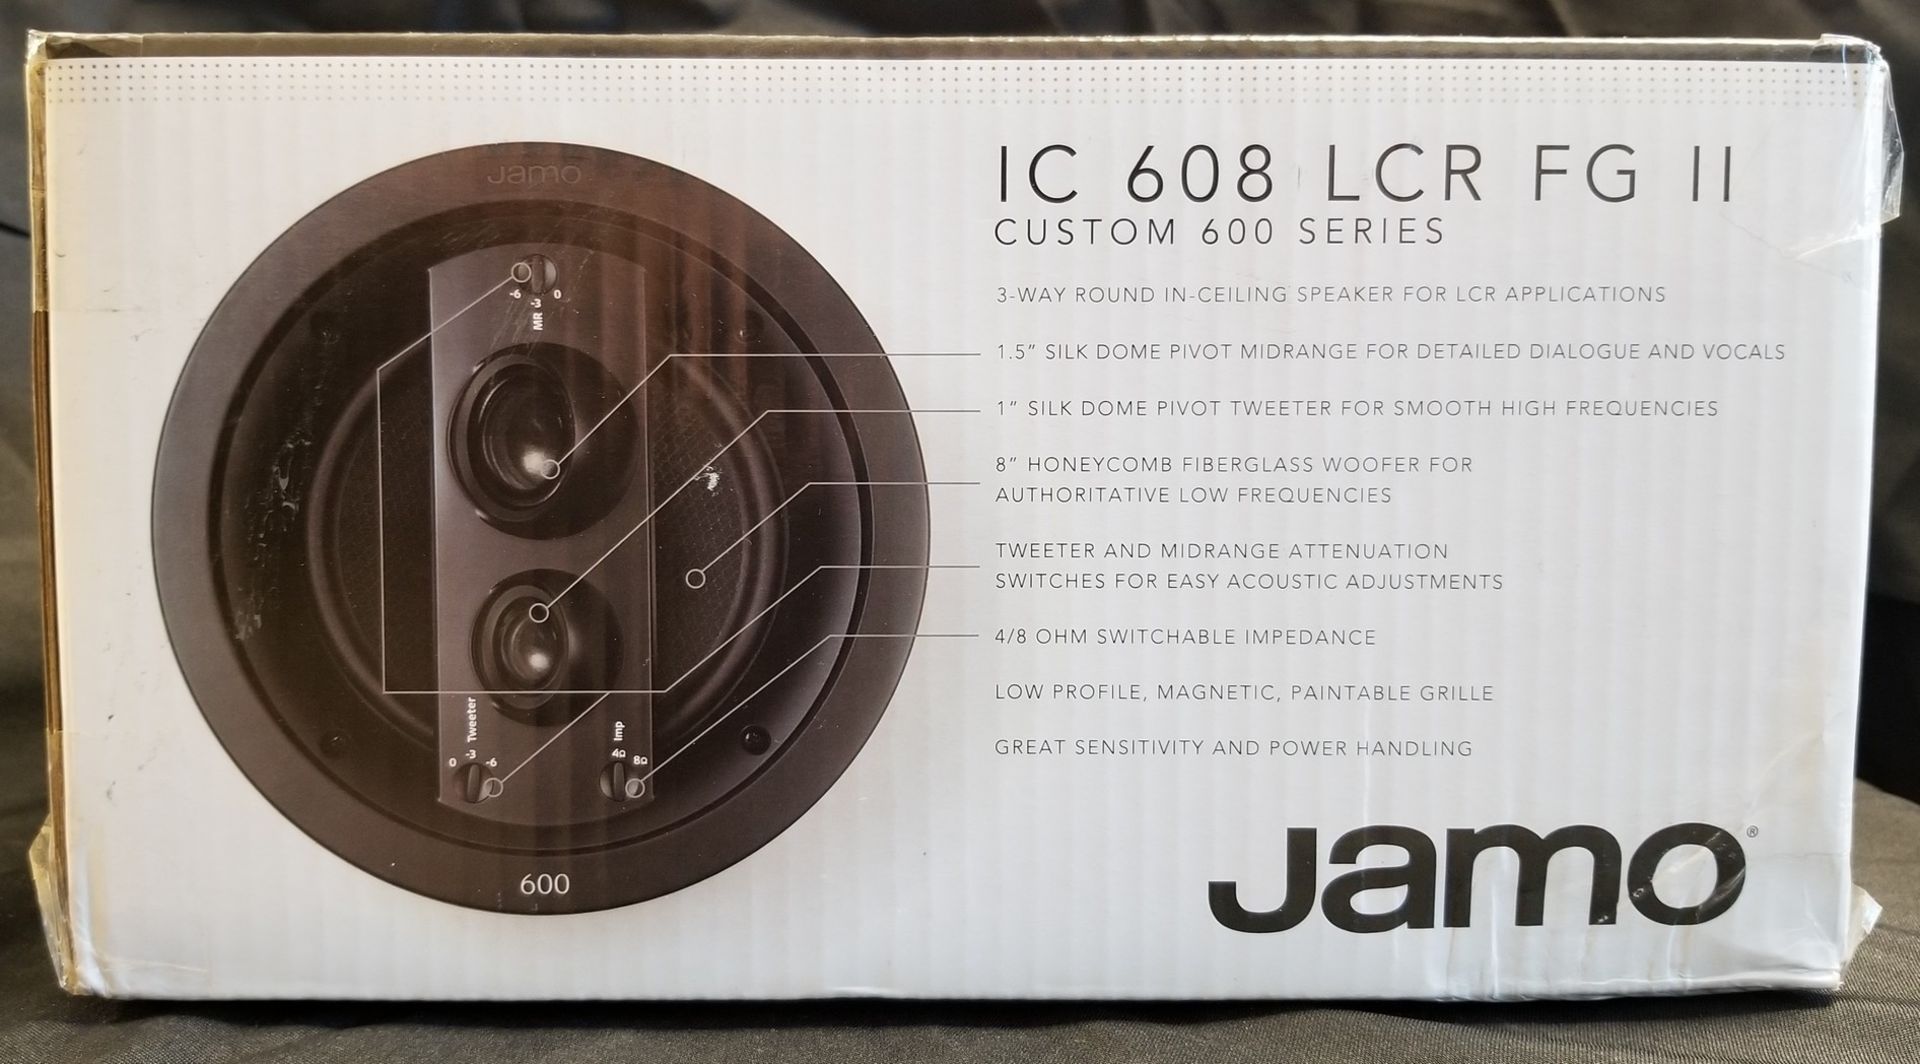 JAMO, IC 608 LCR FG II, 3 WAY IN-CEILING SPEAKER - (BNIB) $699 USD - Image 2 of 3